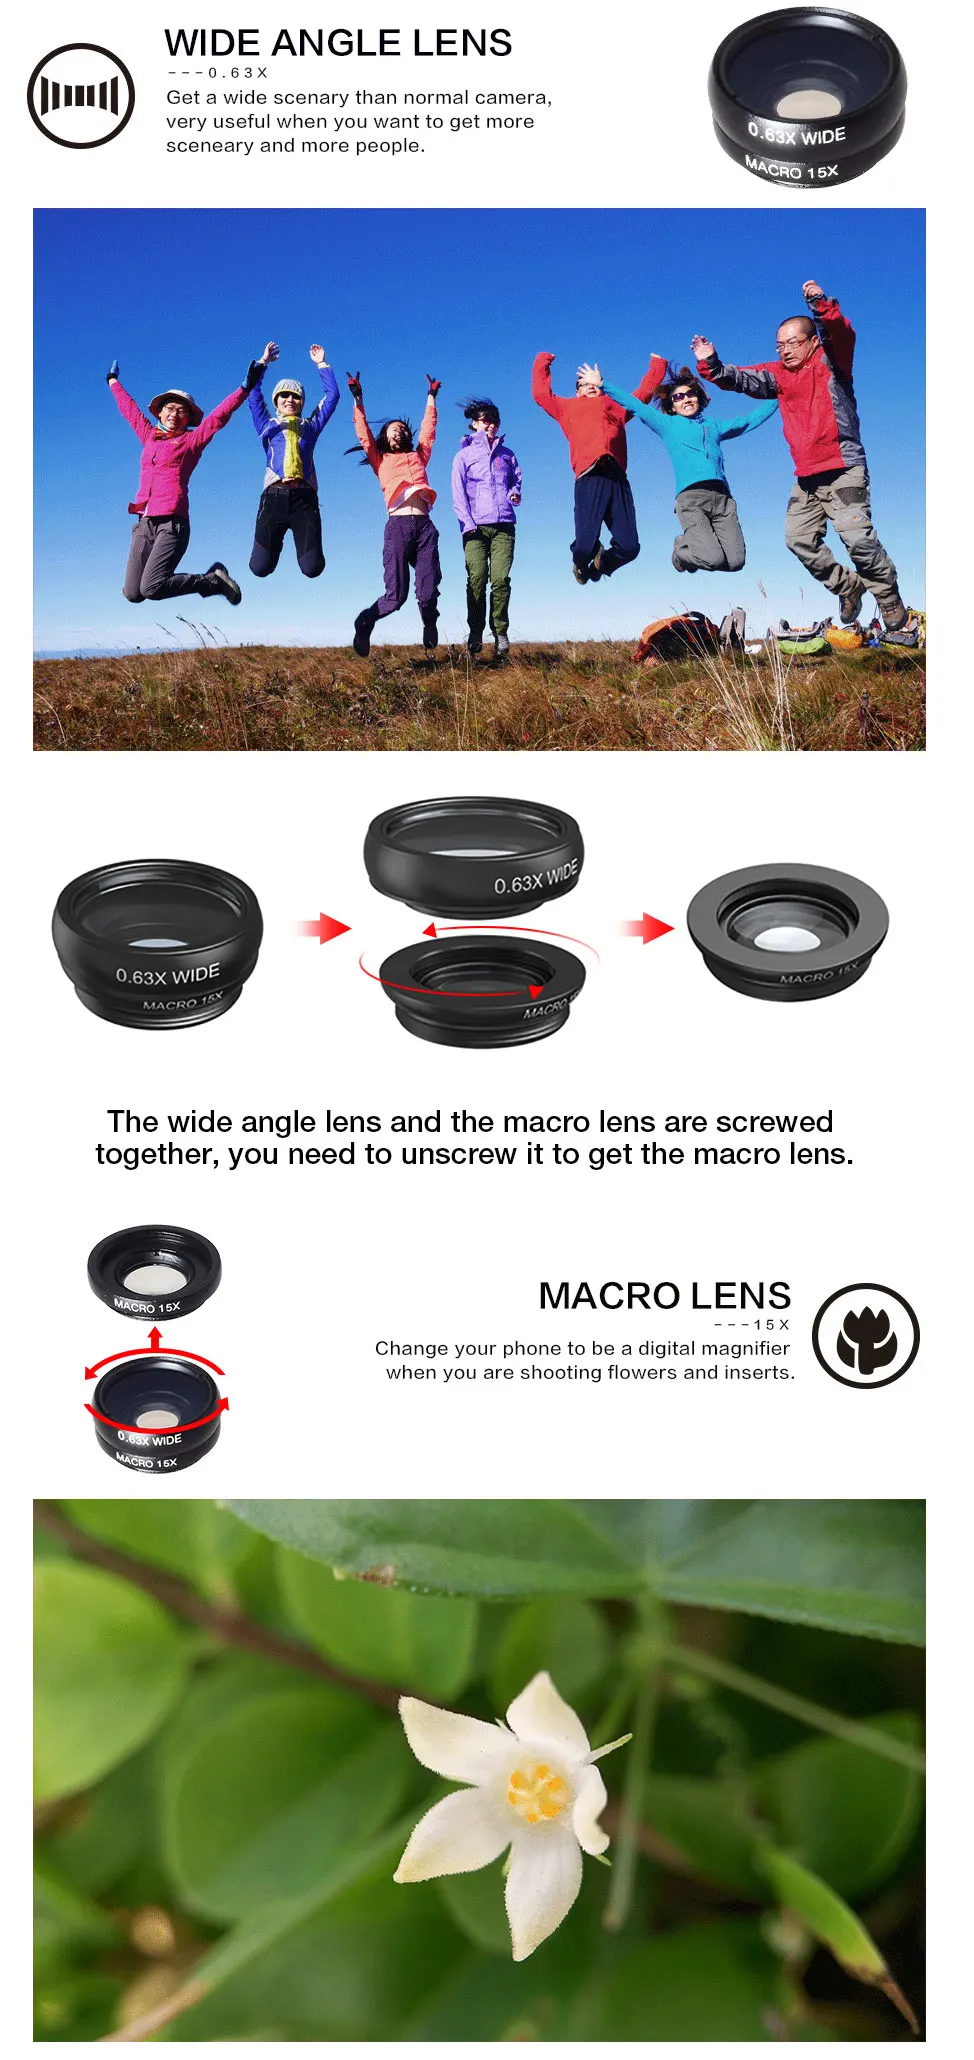 2020 Apexel wholesale DG5 wide angle&Macro, fisheye, telephoto Optical camera Cell Phone lens